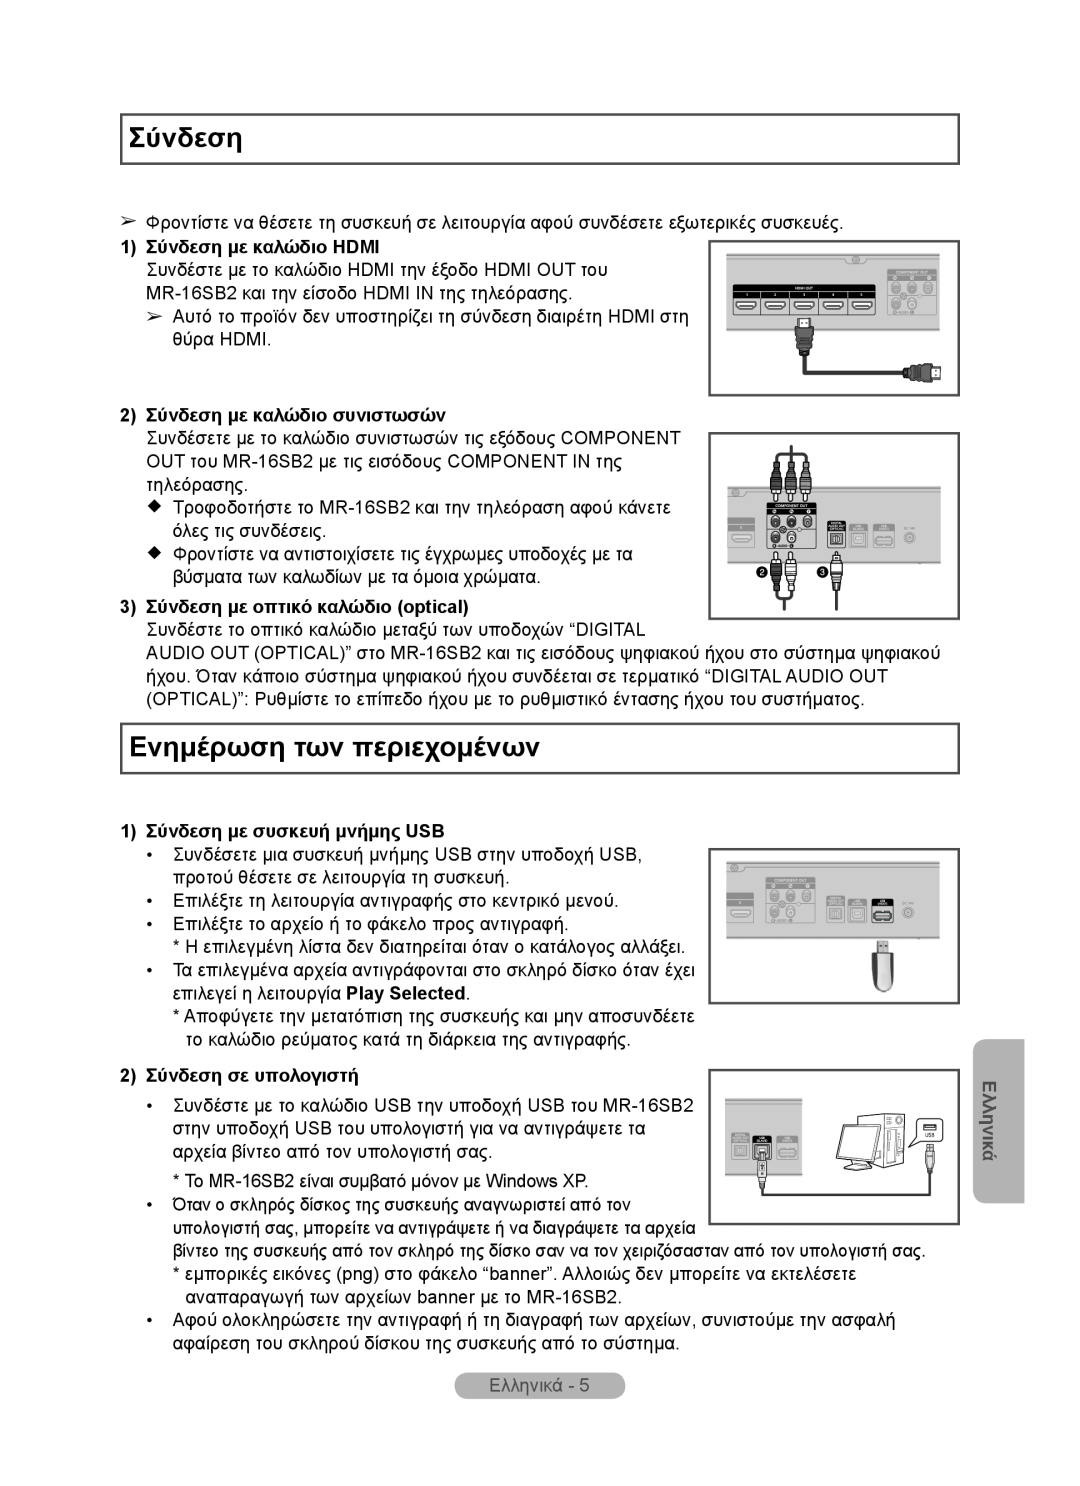 Samsung MR-16SB2 Ενημέρωση των περιεχομένων, 1 Σύνδεση με καλώδιο HDMI, 2 Σύνδεση με καλώδιο συνιστωσών, Ελληνικά 